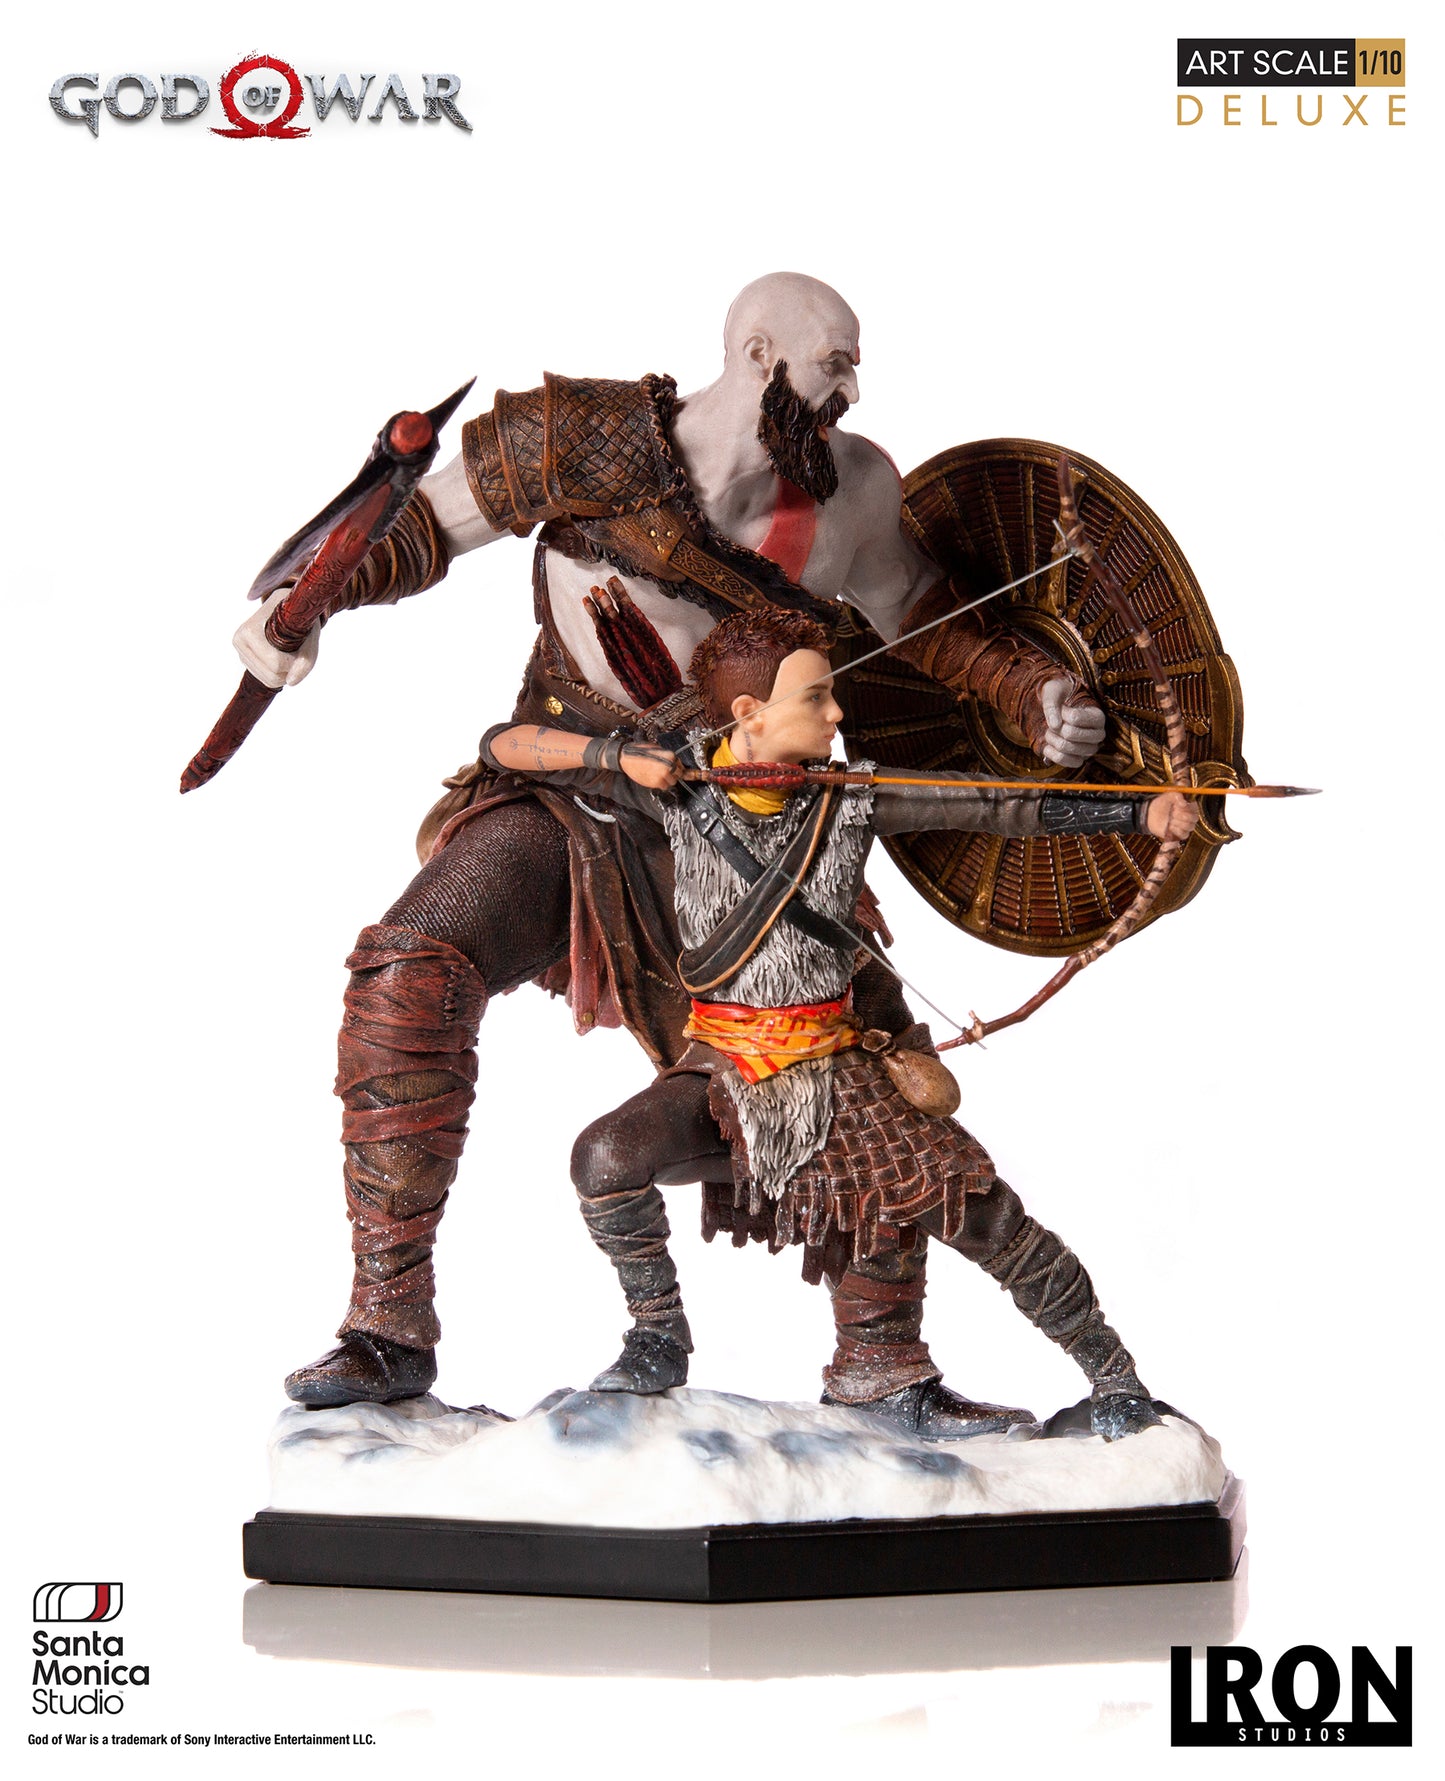 Iron Studios Art Scale 1/10 God of War Kratos and Altreus Deluxe Art